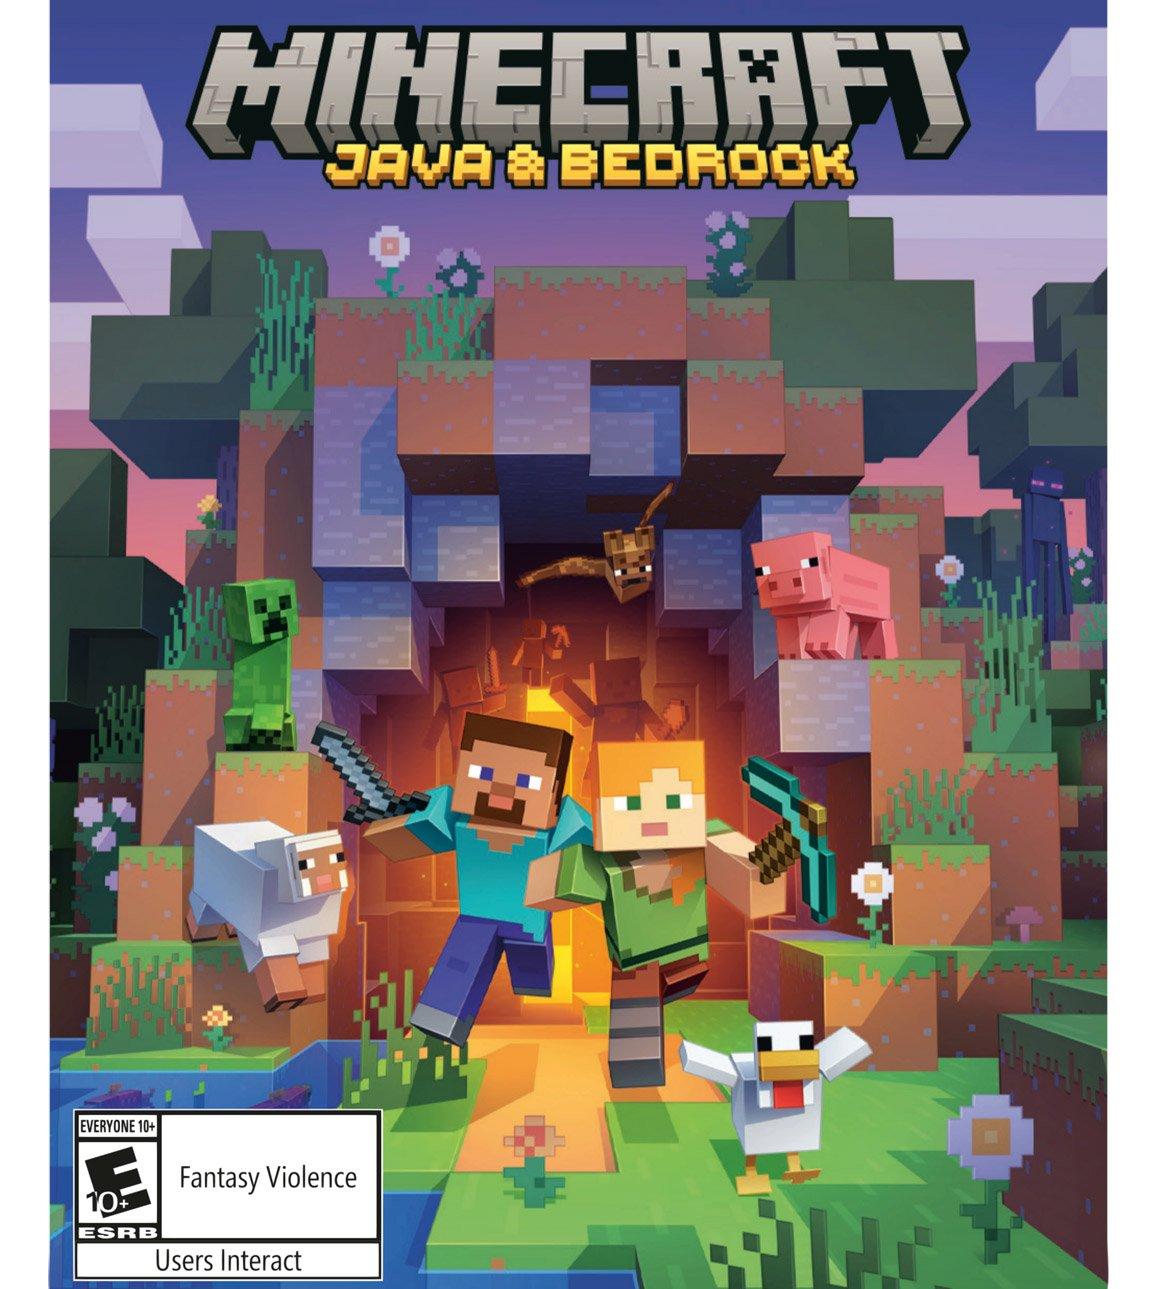 Minecraft Java and Bedrock Edition - PC